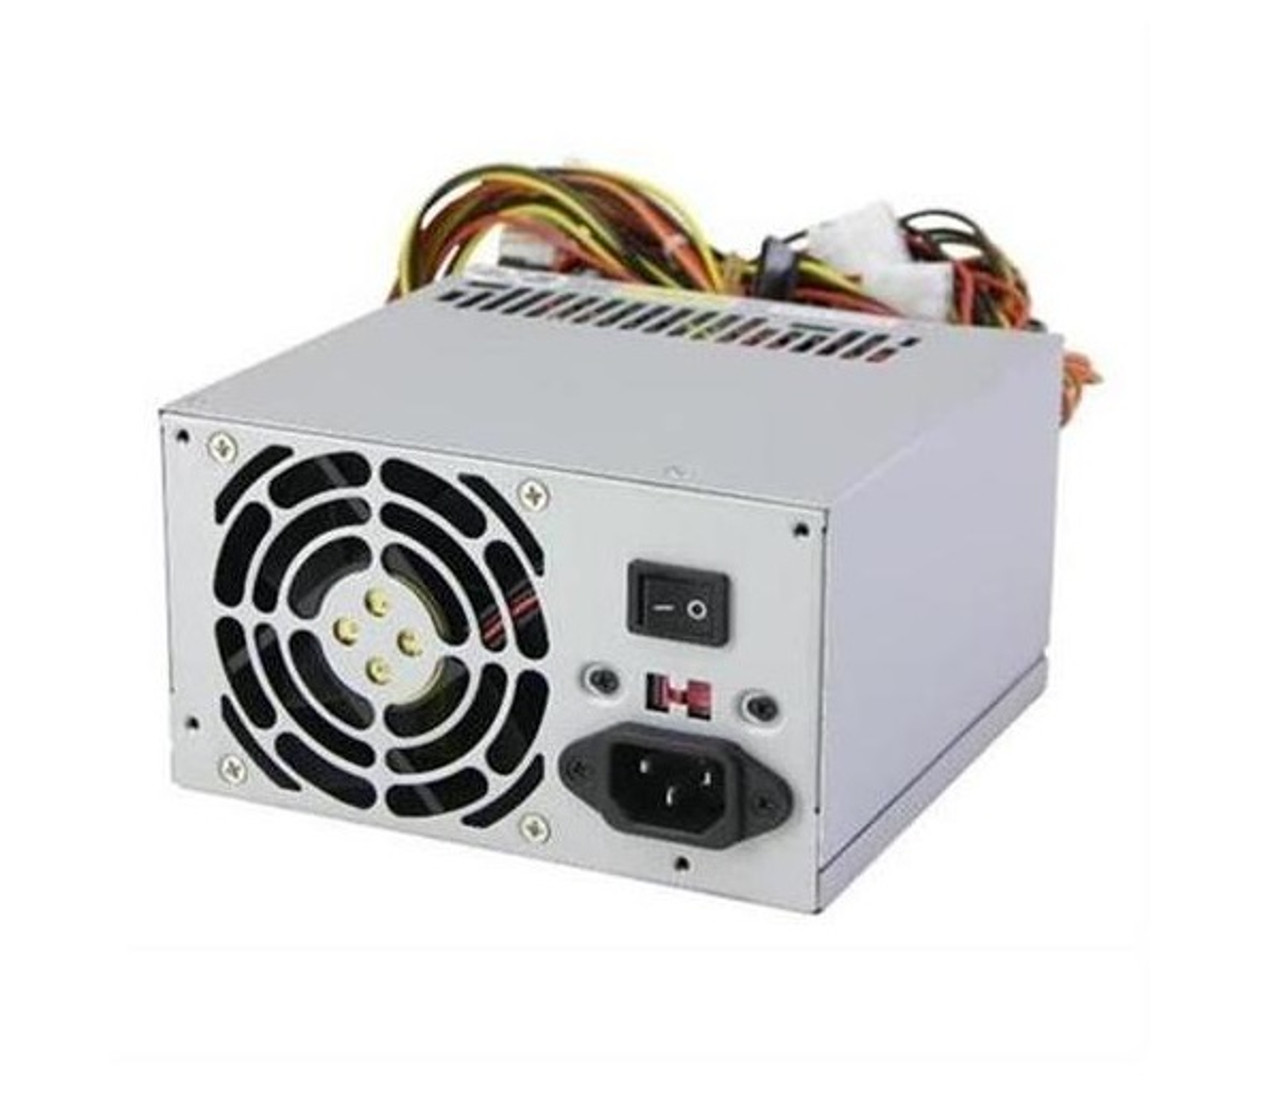 0950-2878 - HP 200-Watts AC 120-240V Input ATX Power Supply for Vectra VE6/7/8 Desktop PC